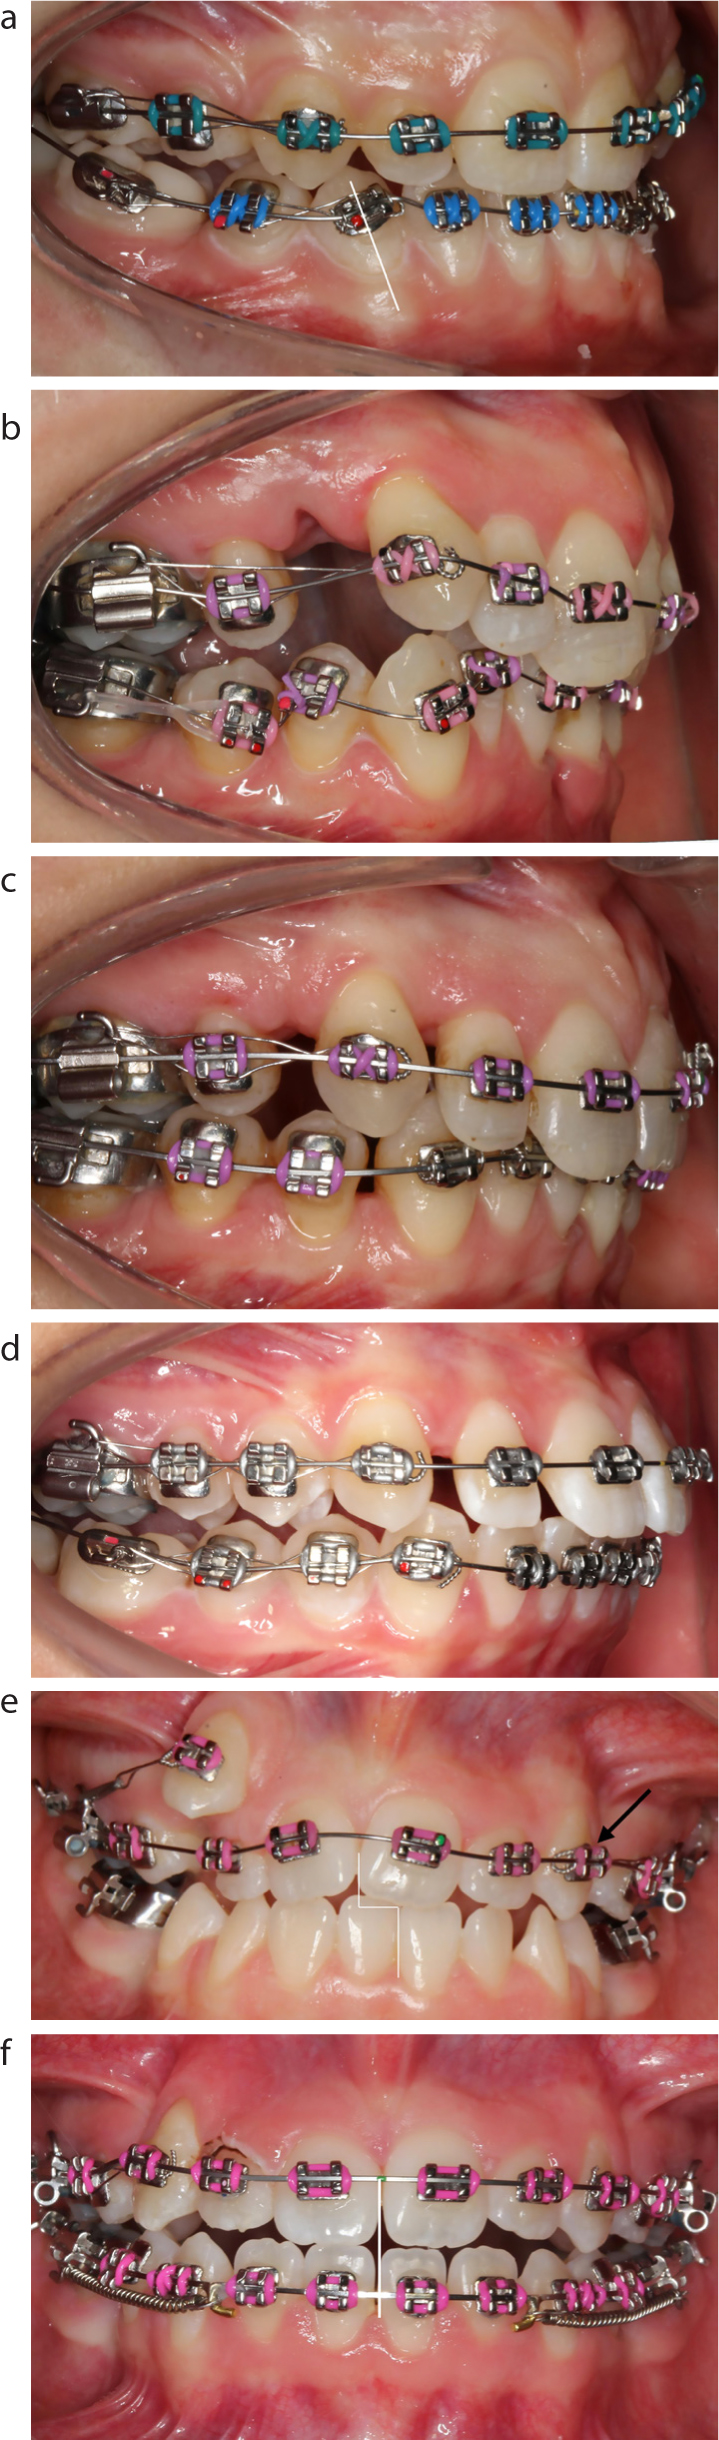 Ligation ties in orthodontics